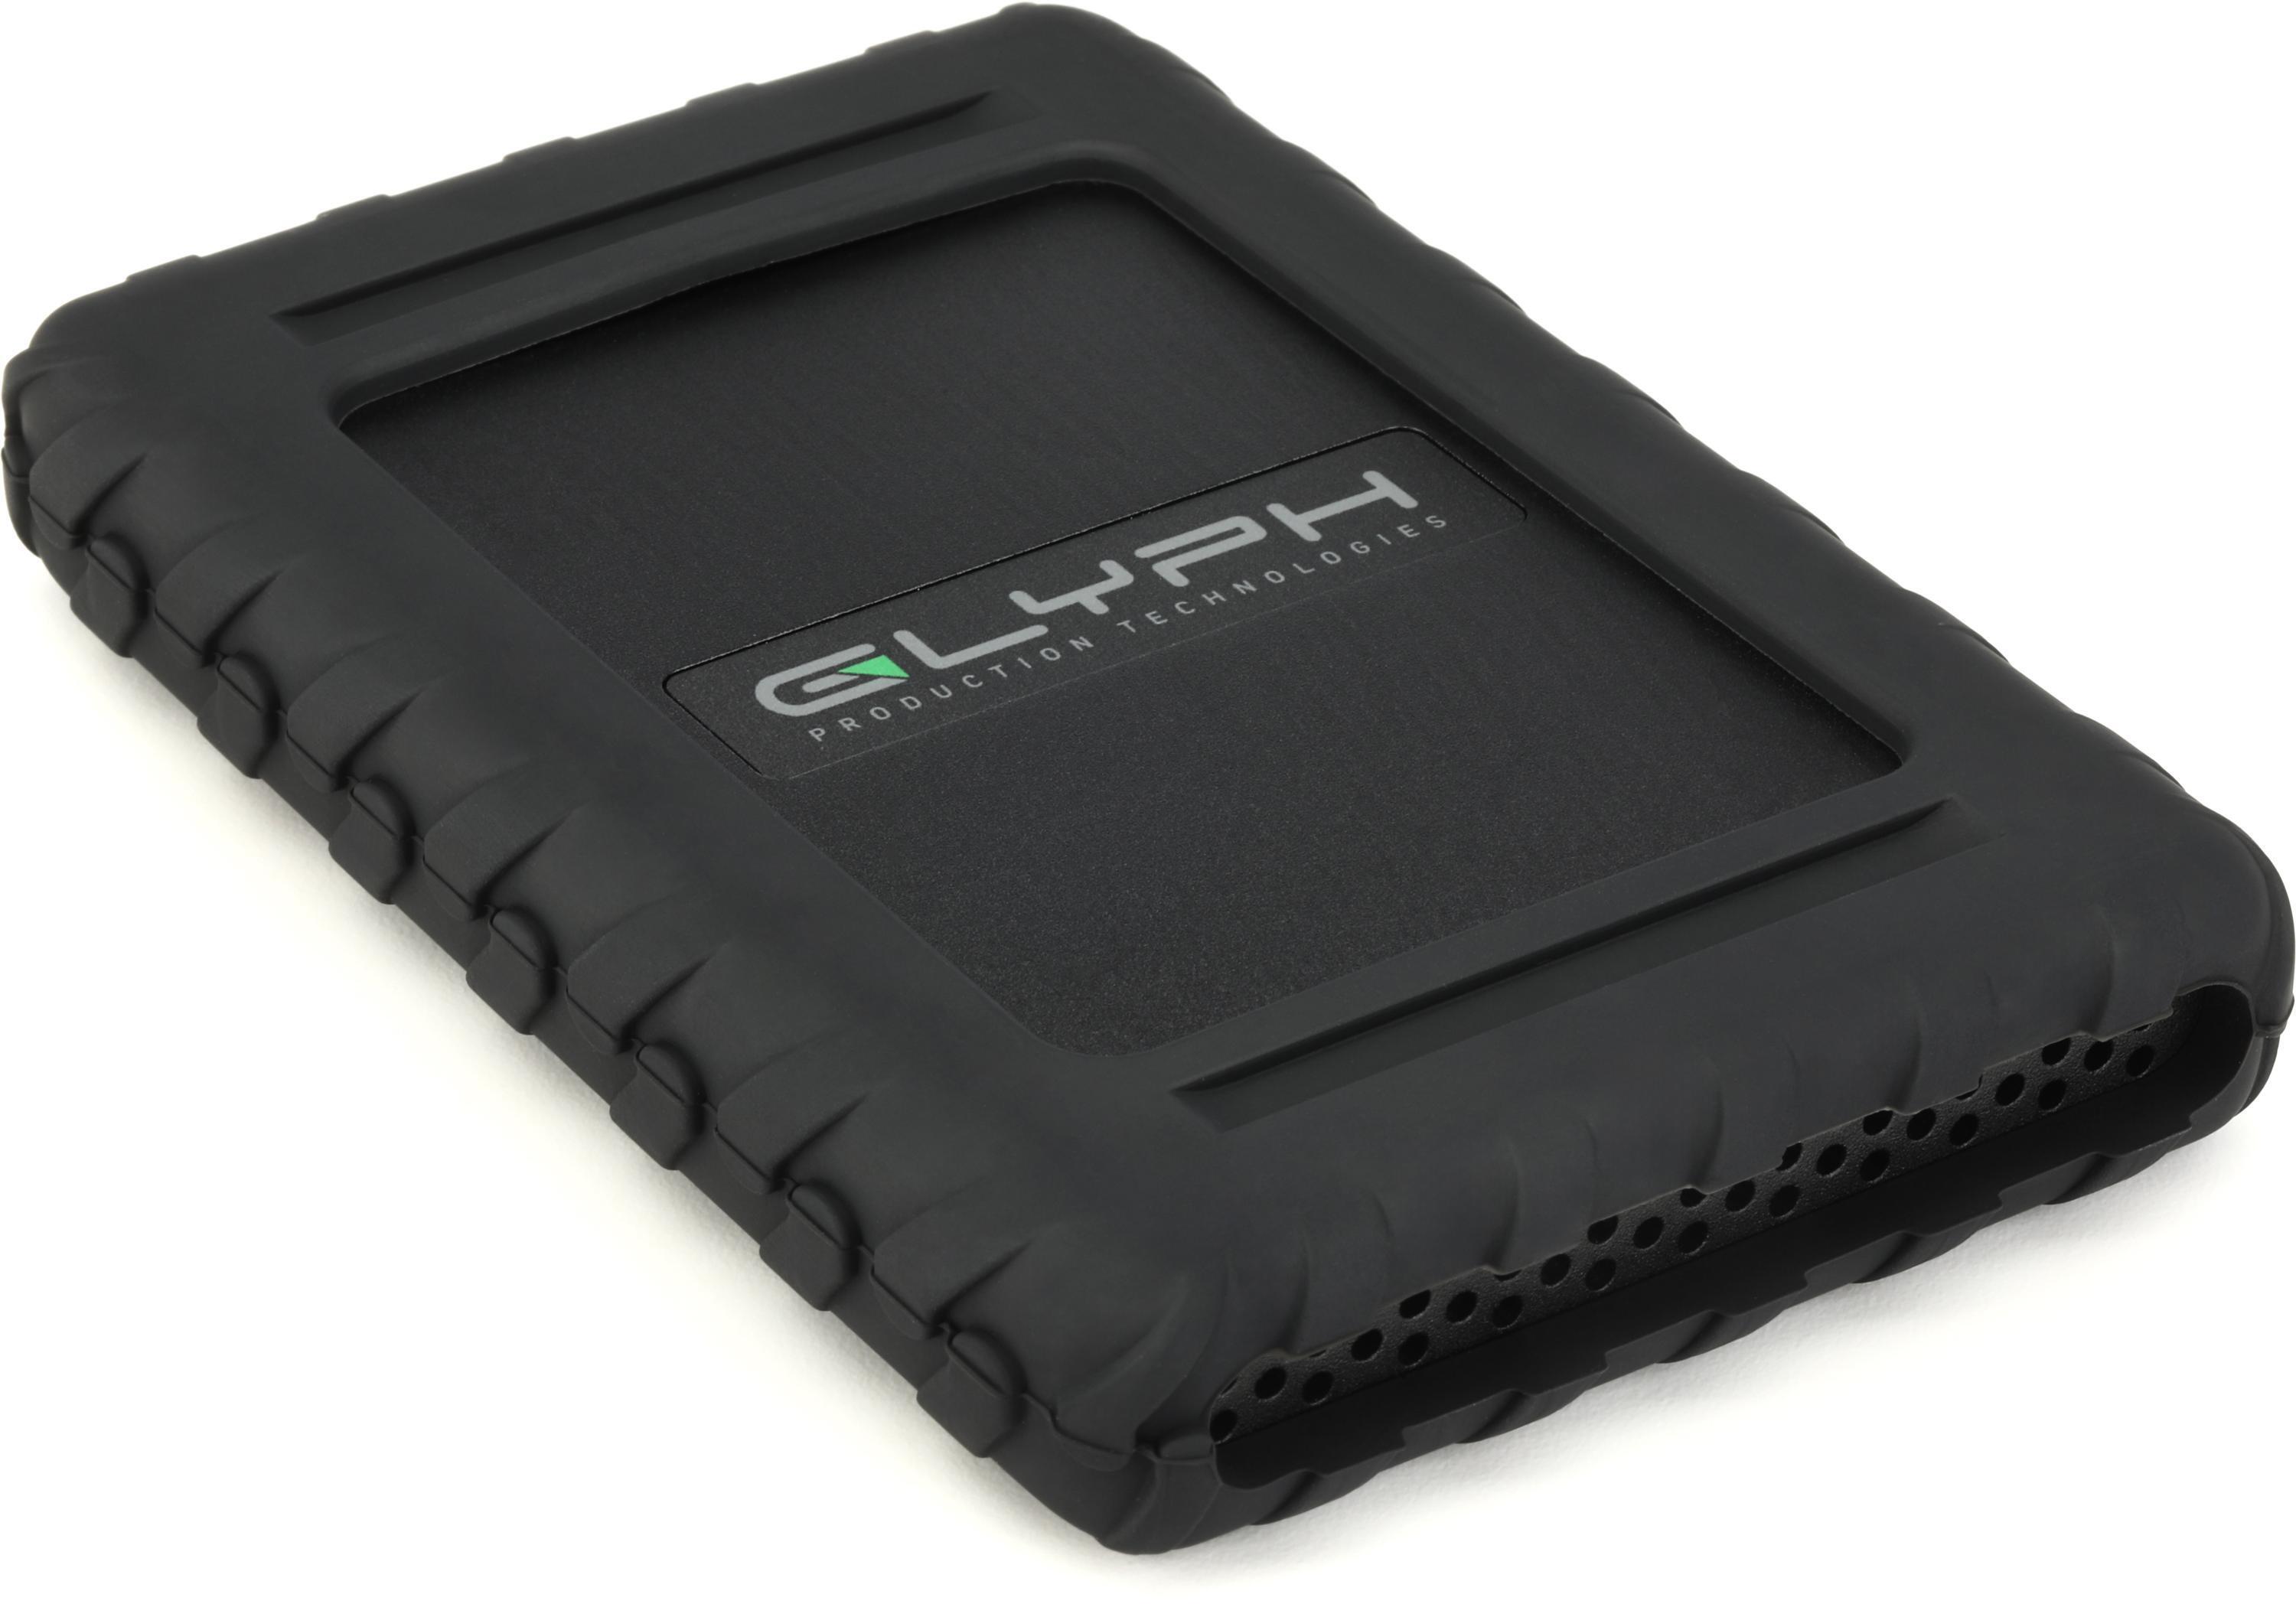 Blackbox Plus 1TB Rugged Portable Hard Drive - Sweetwater